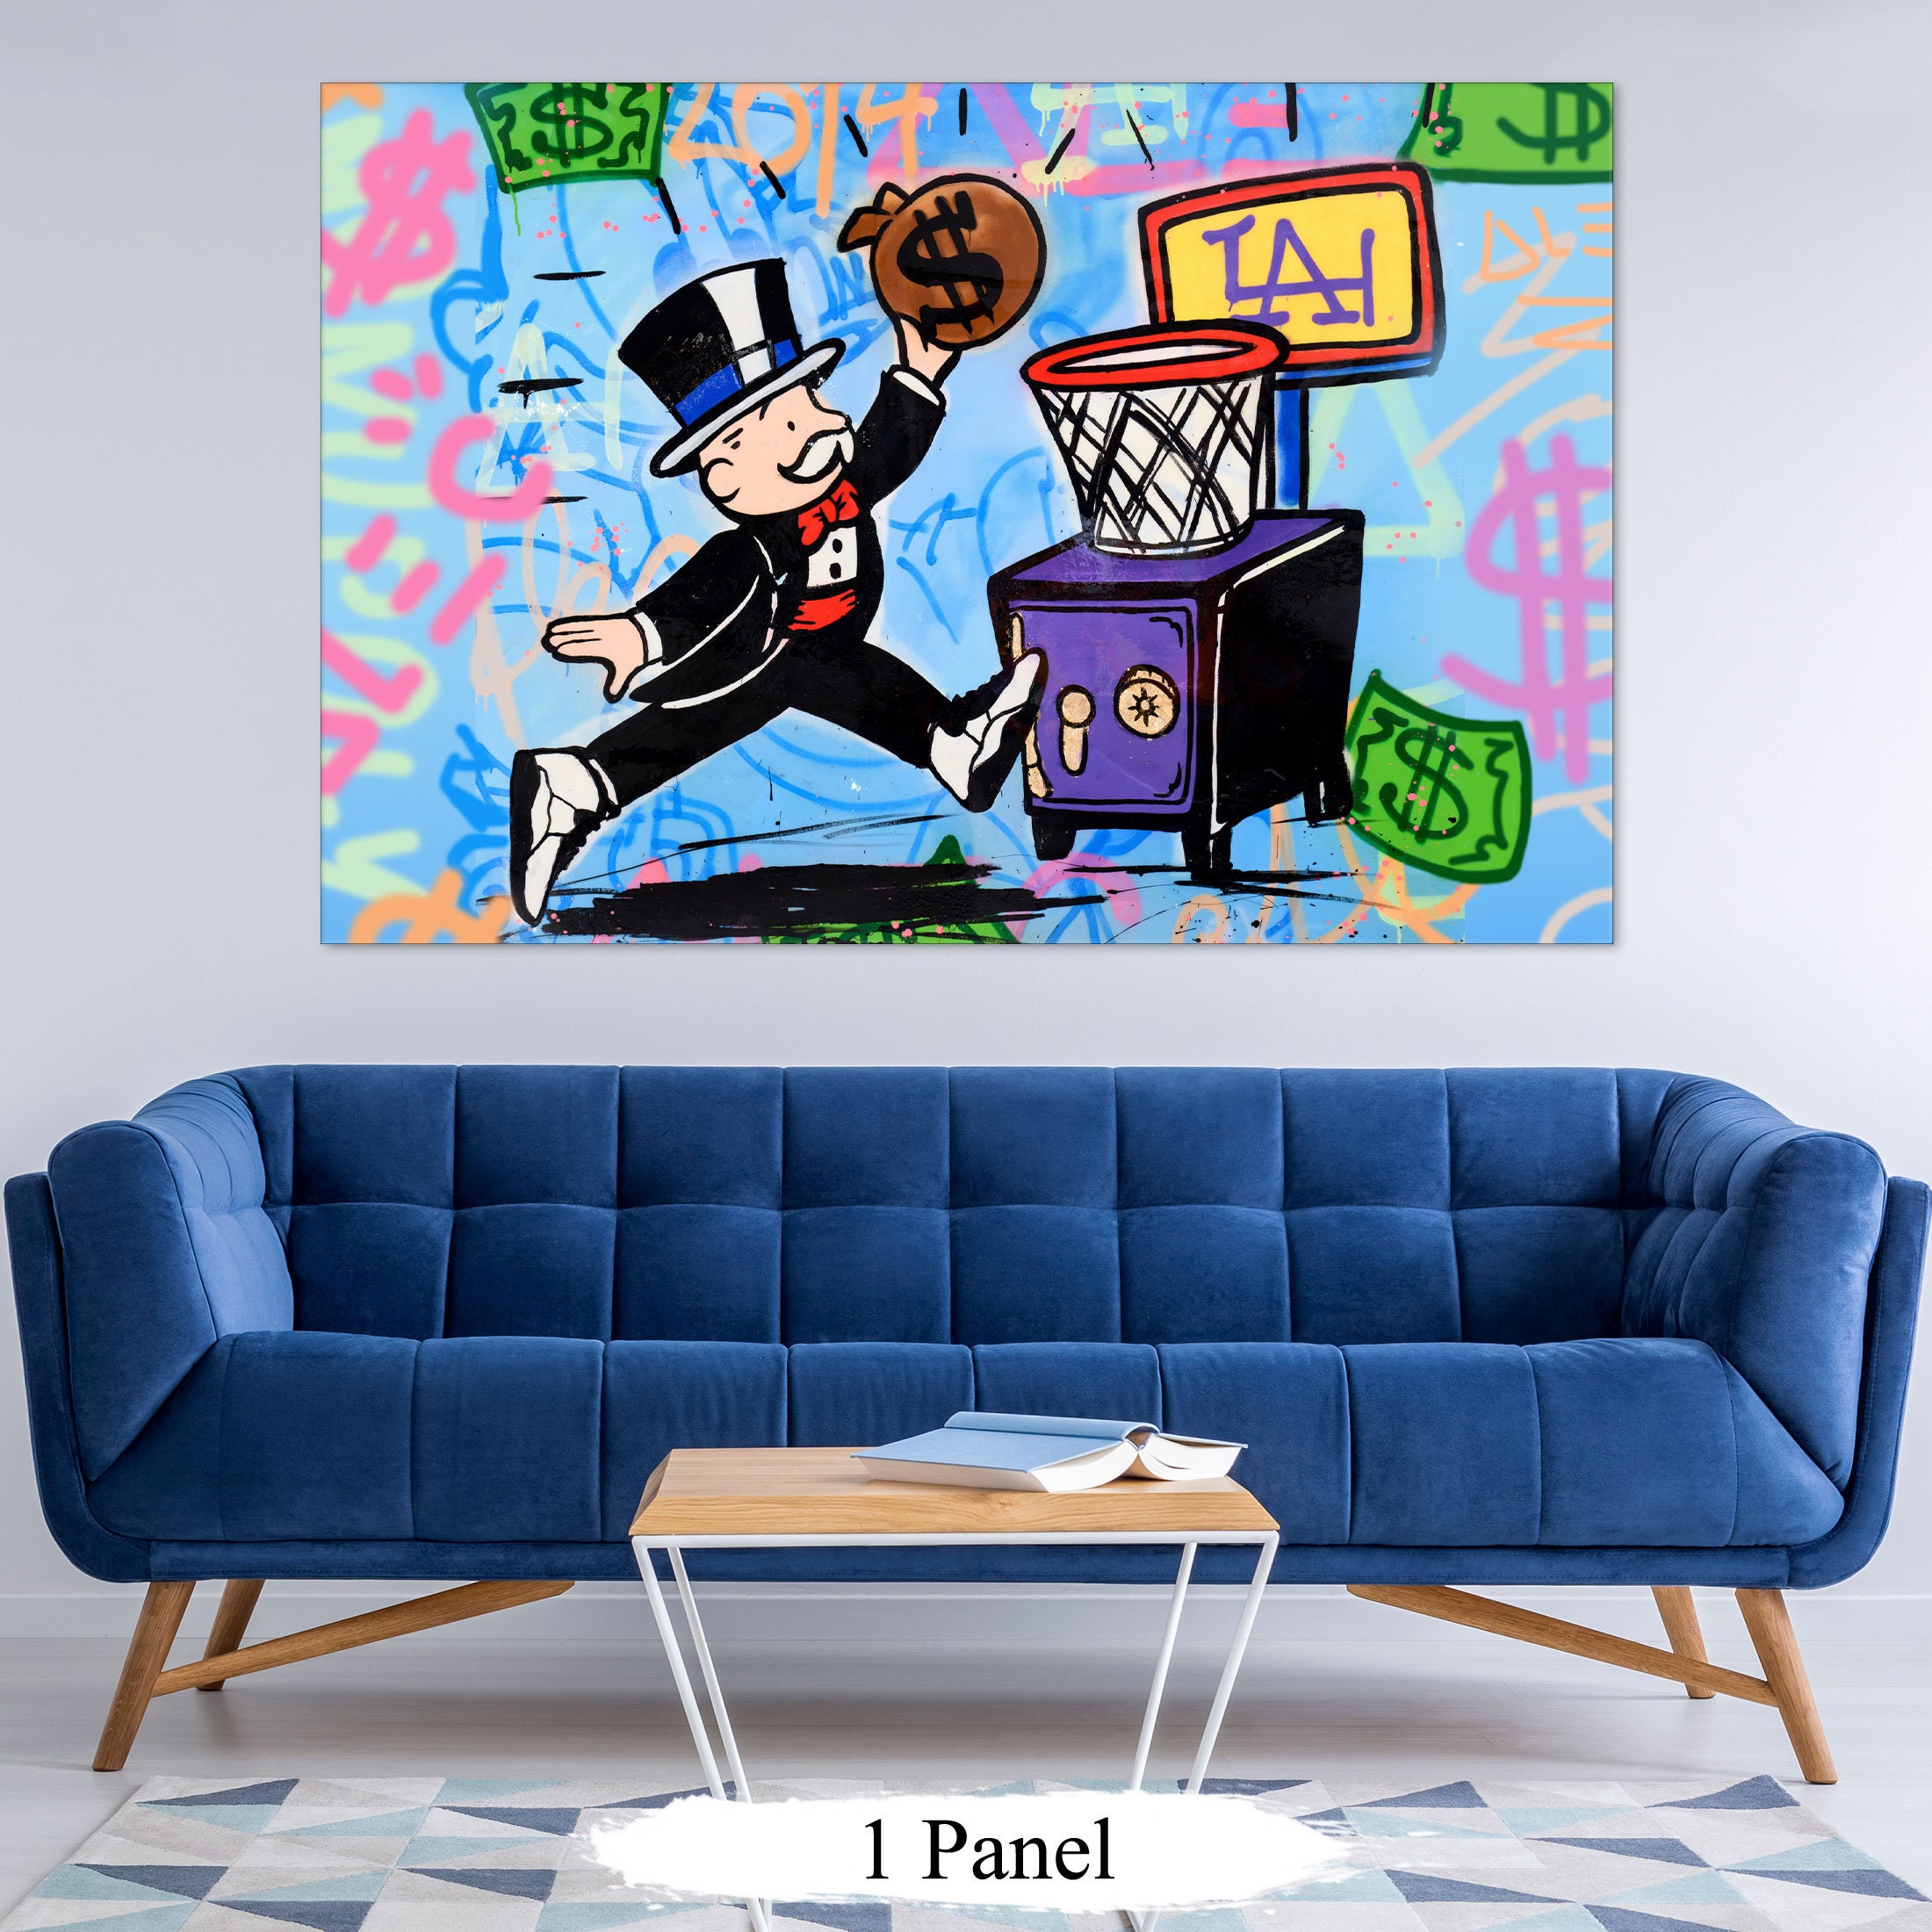  Monopoly Louis LV Motivational Wall Art - Positive